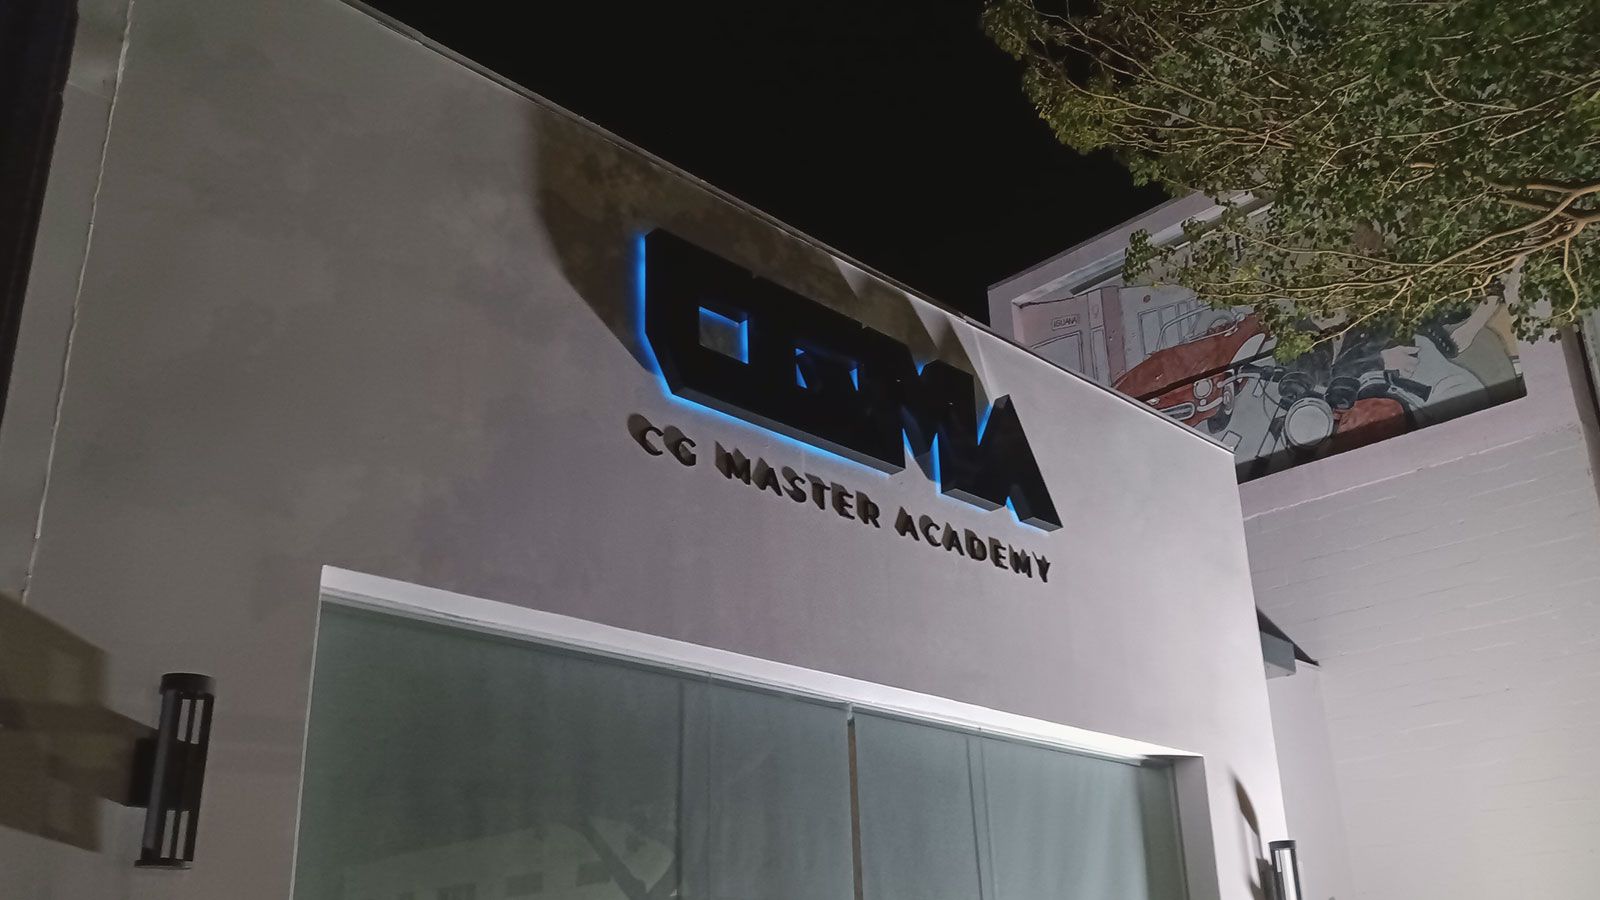 CG Master Academy building signs